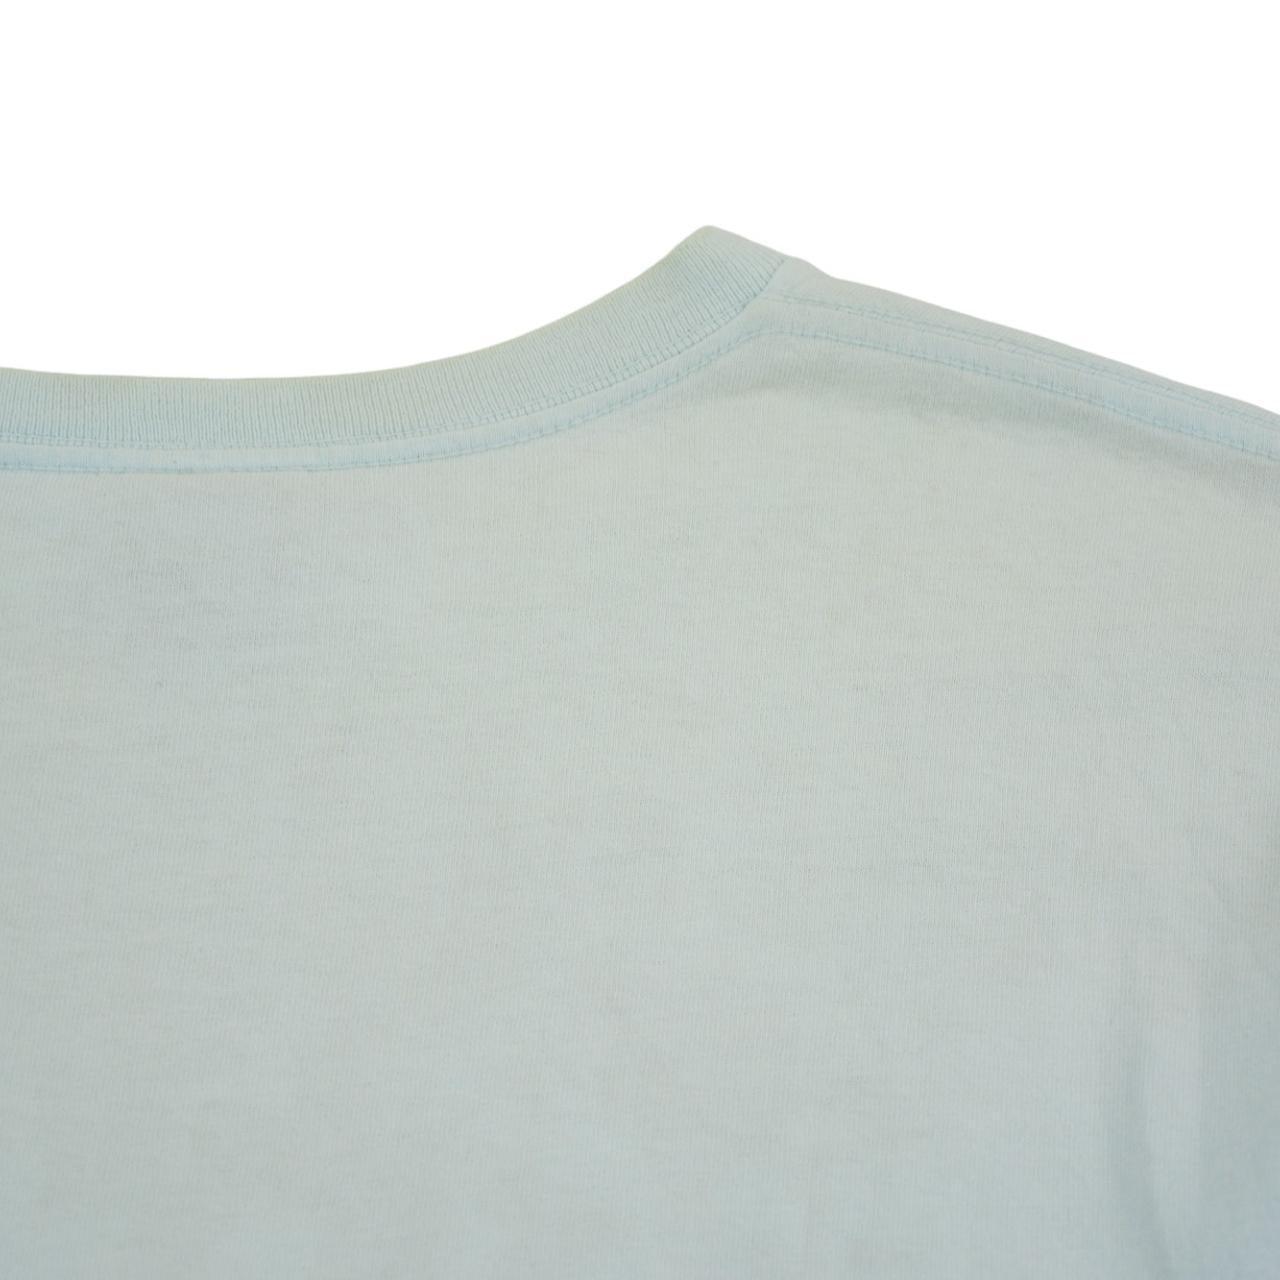 Vintage Stussy T Shirt Size M - Known Source